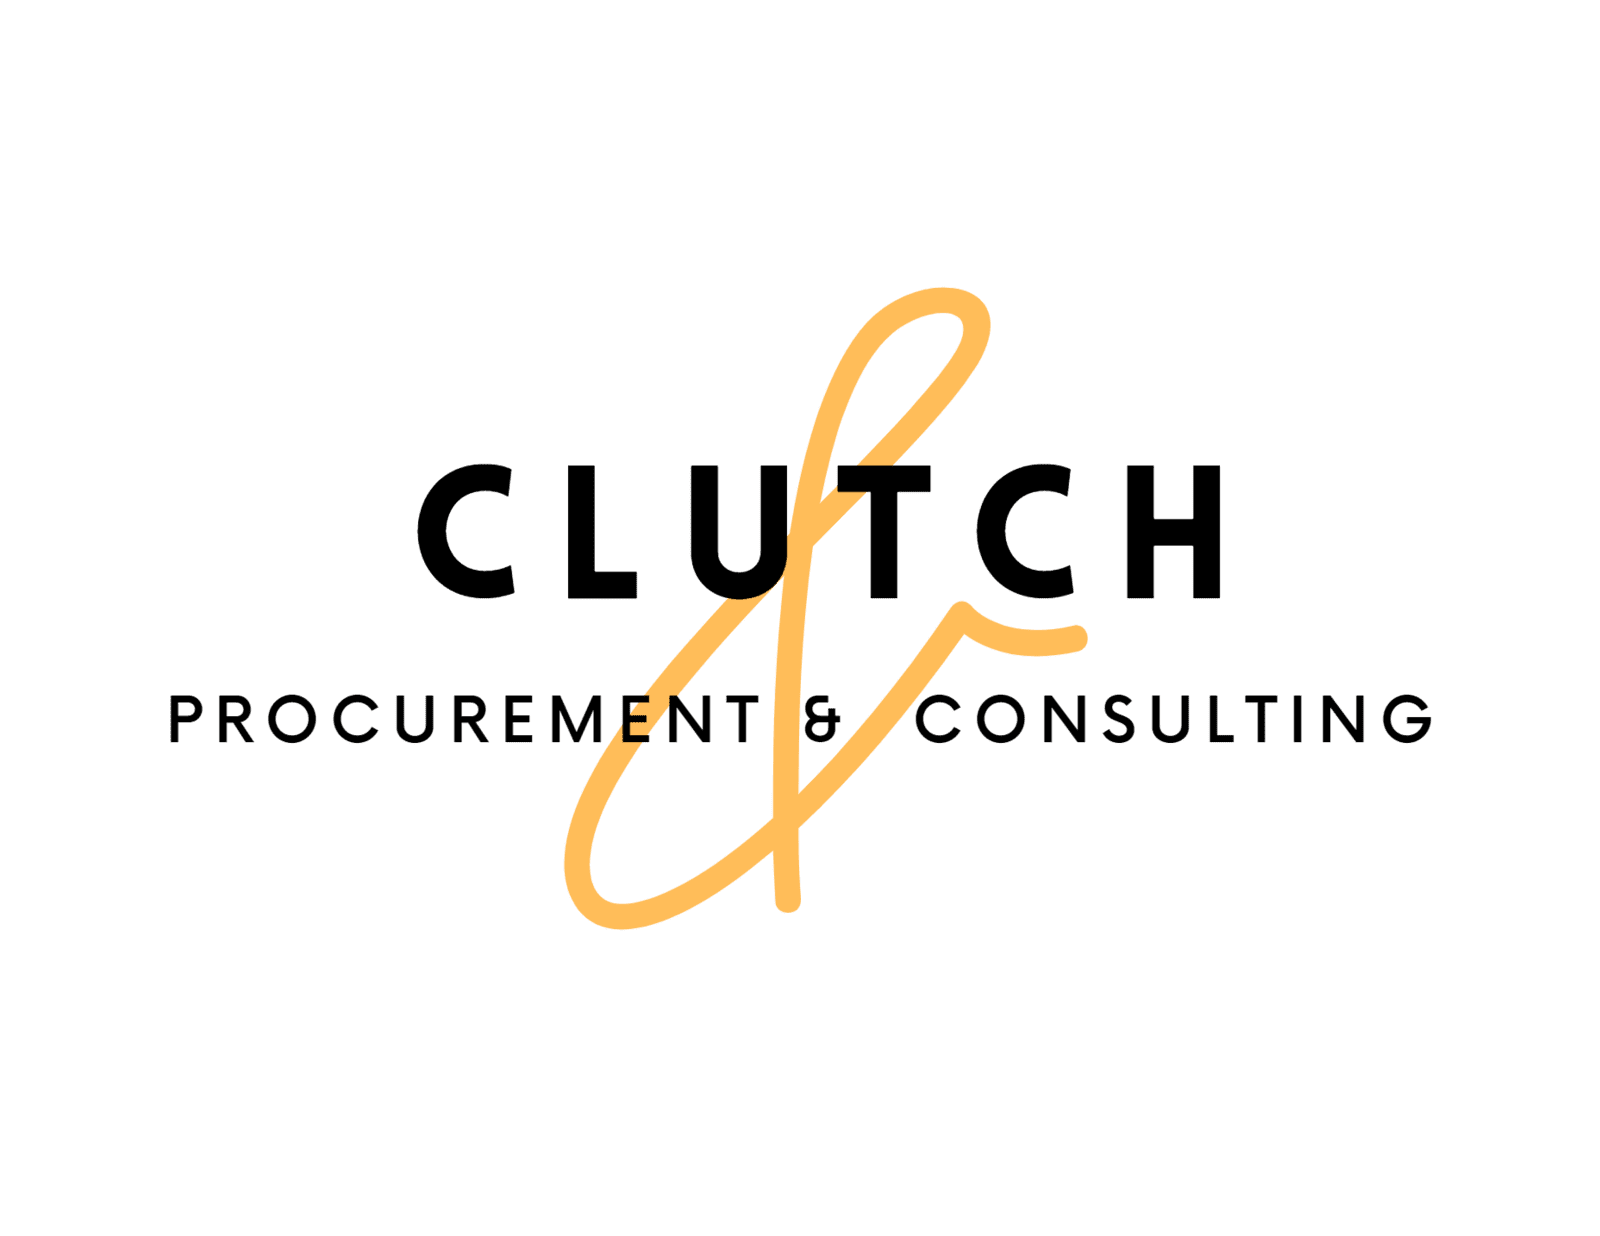 clutch procurement & consulting logo